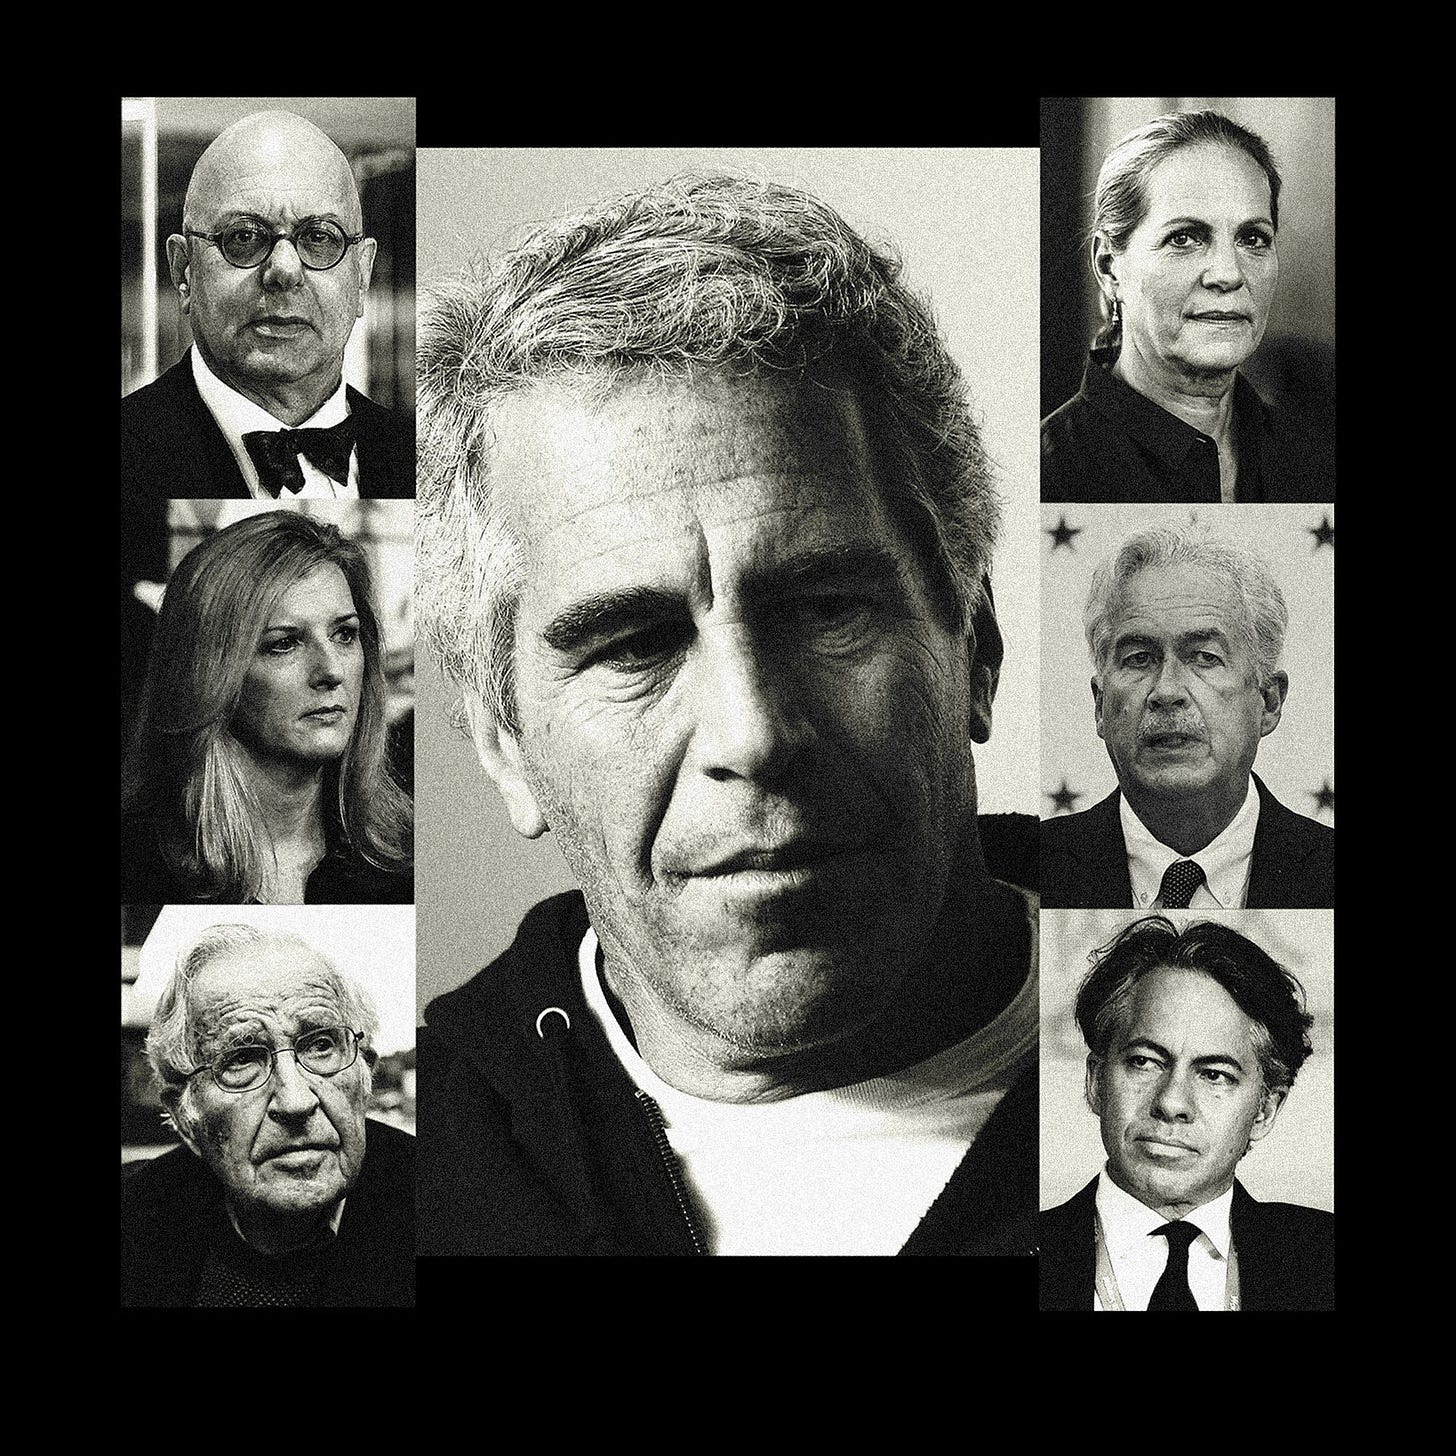 Jeffrey Epstein, center, and clockwise from top right: Ariane de Rothschild, William Burns, Joshua Cooper Ramo, Noam Chomsky, Kathryn Ruemmler and Leon Botstein.